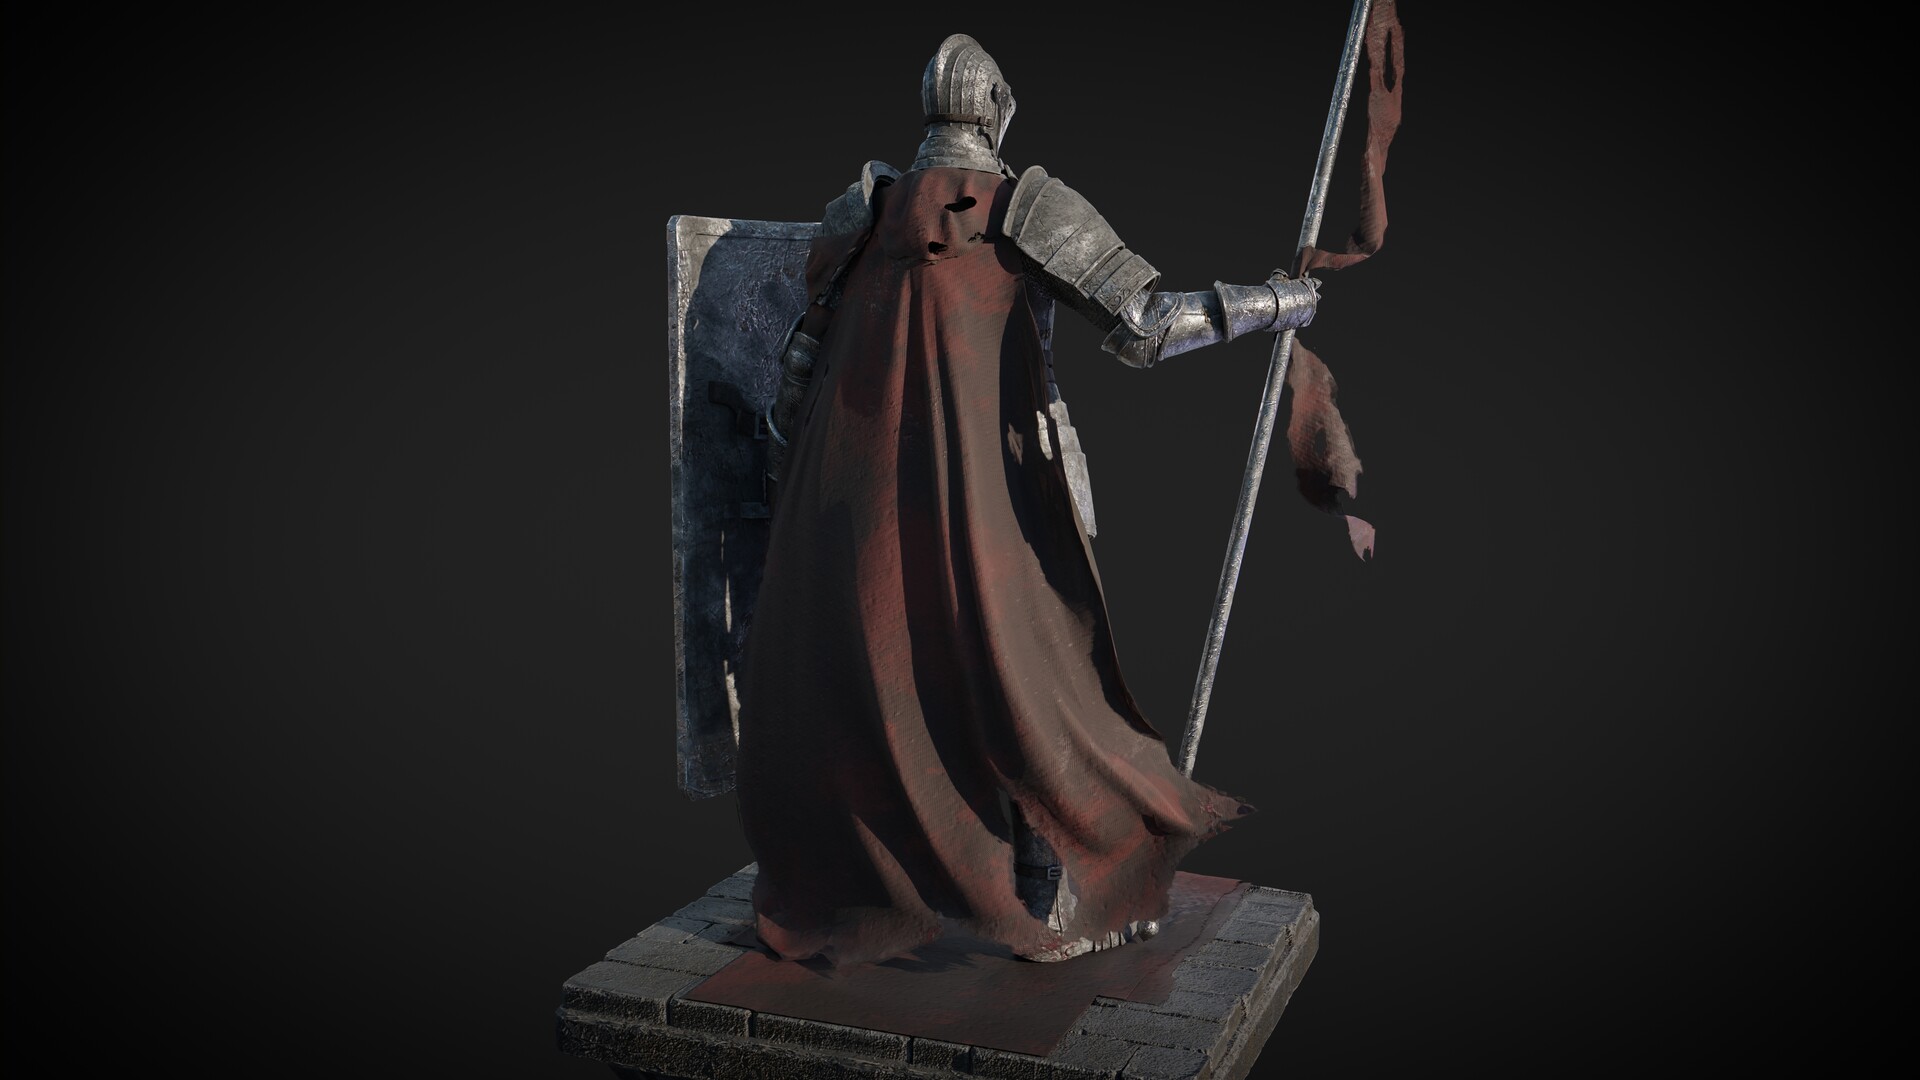 Lautrec Knight Dark Souls T-Pose 3D model